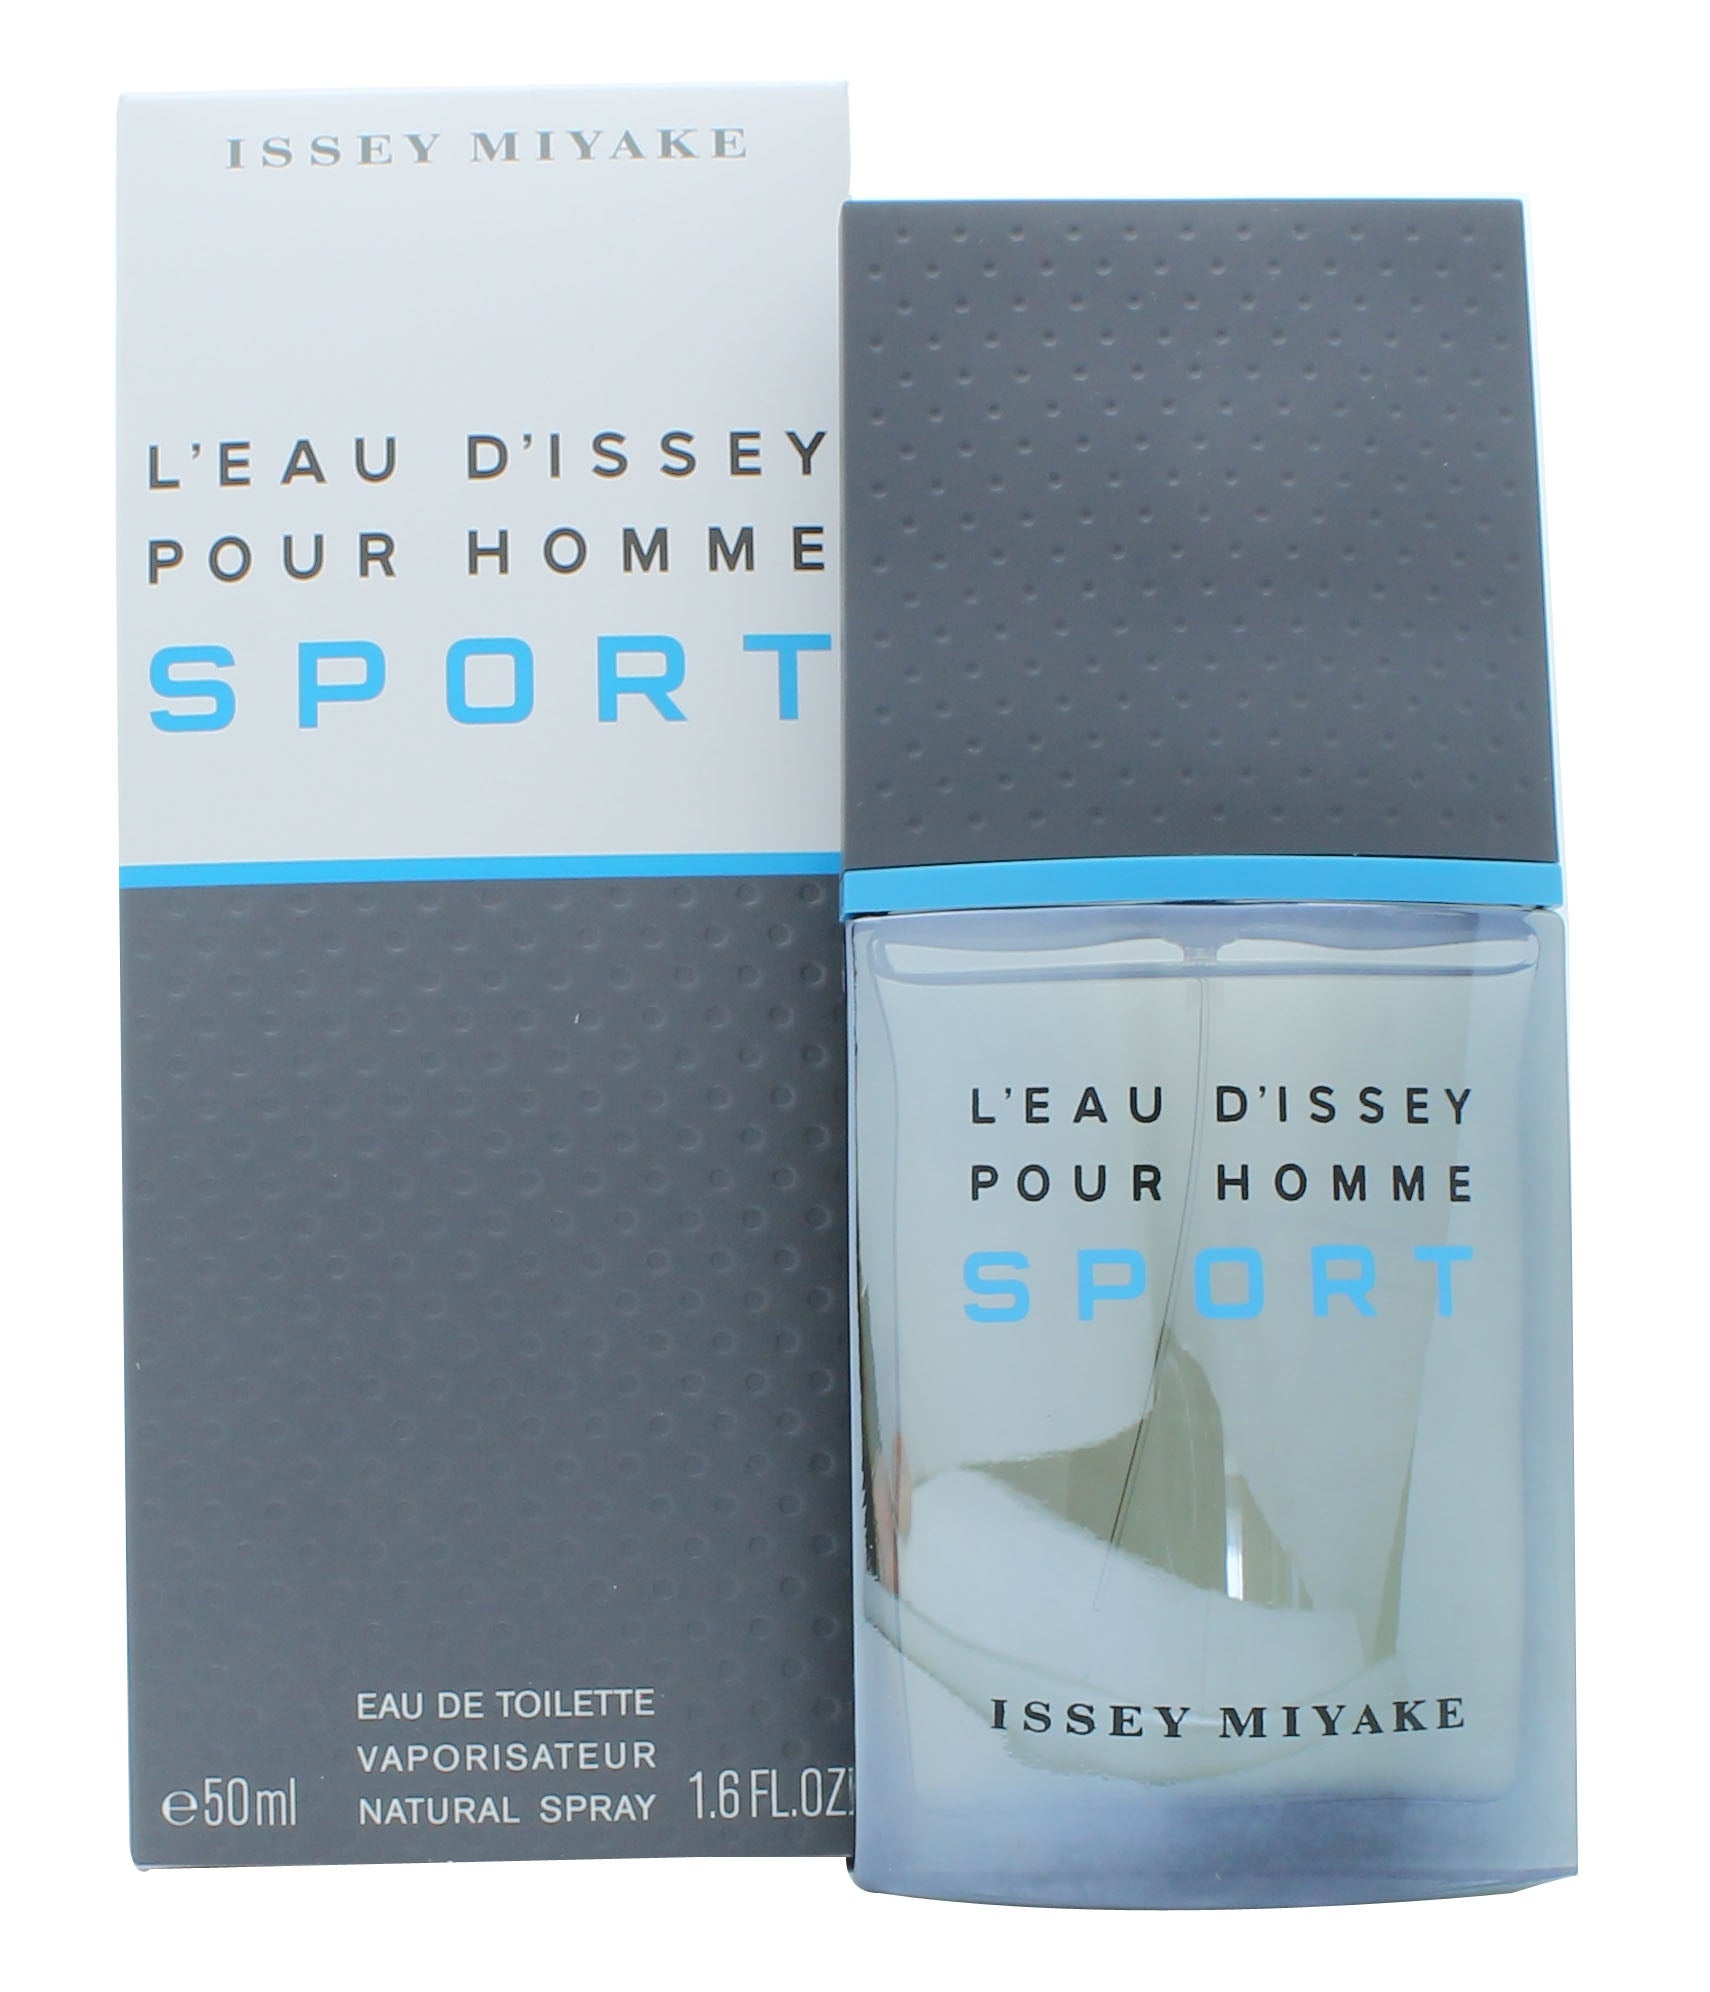 View Issey Miyake LEau dIssey Pour Homme Sport Eau De Toilette 50ml Spray information